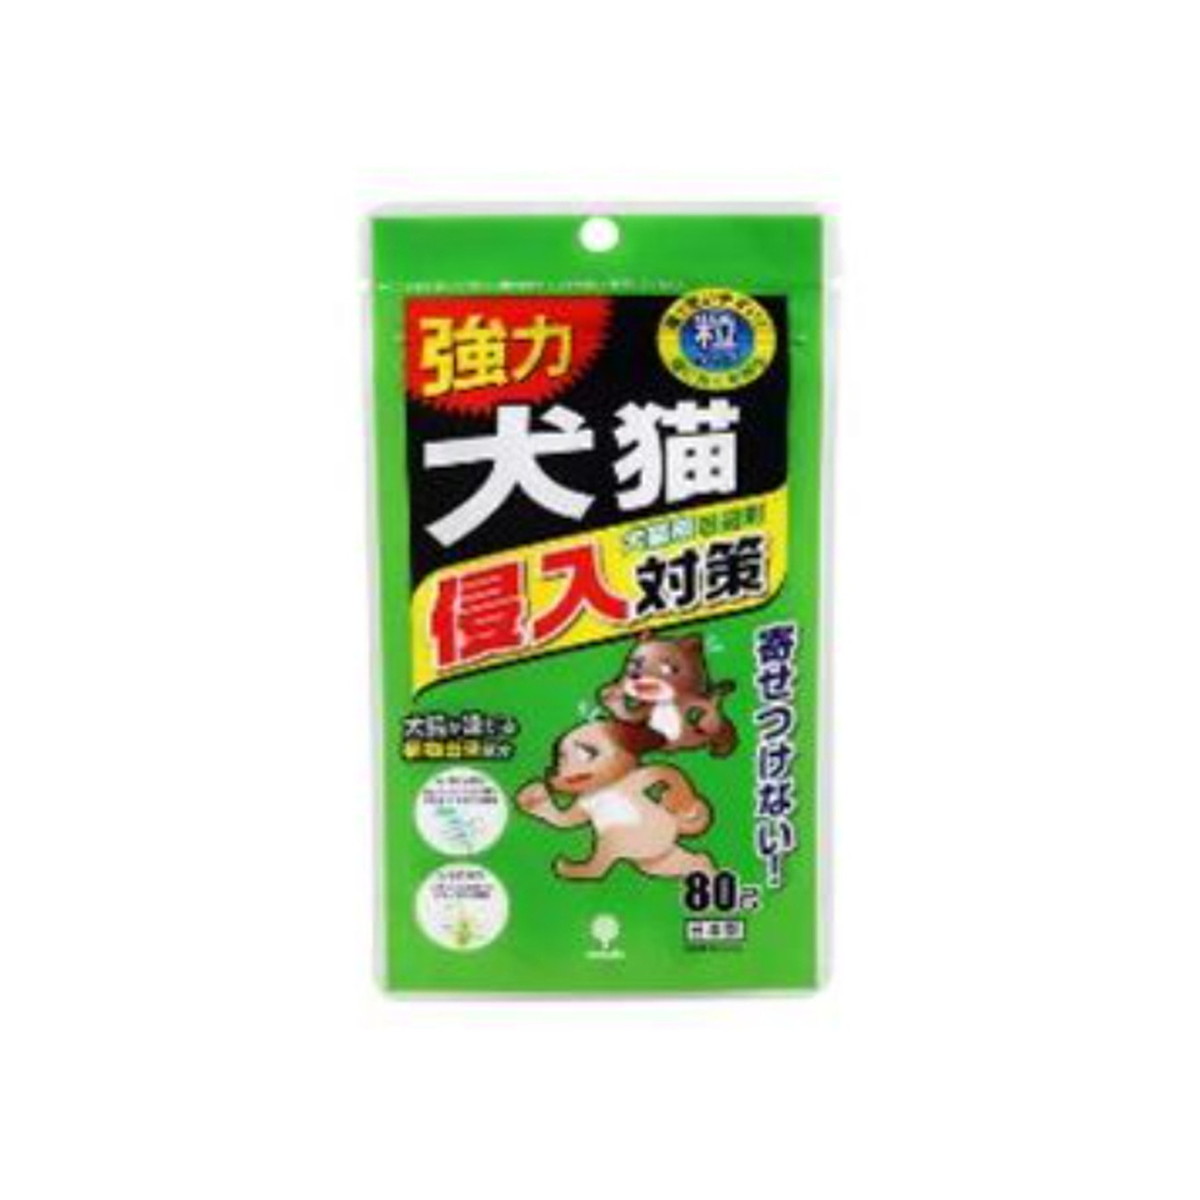 【令和・早い者勝ちセール】紀陽除虫菊 犬猫専用 侵入対策 犬猫用 忌避剤 80g